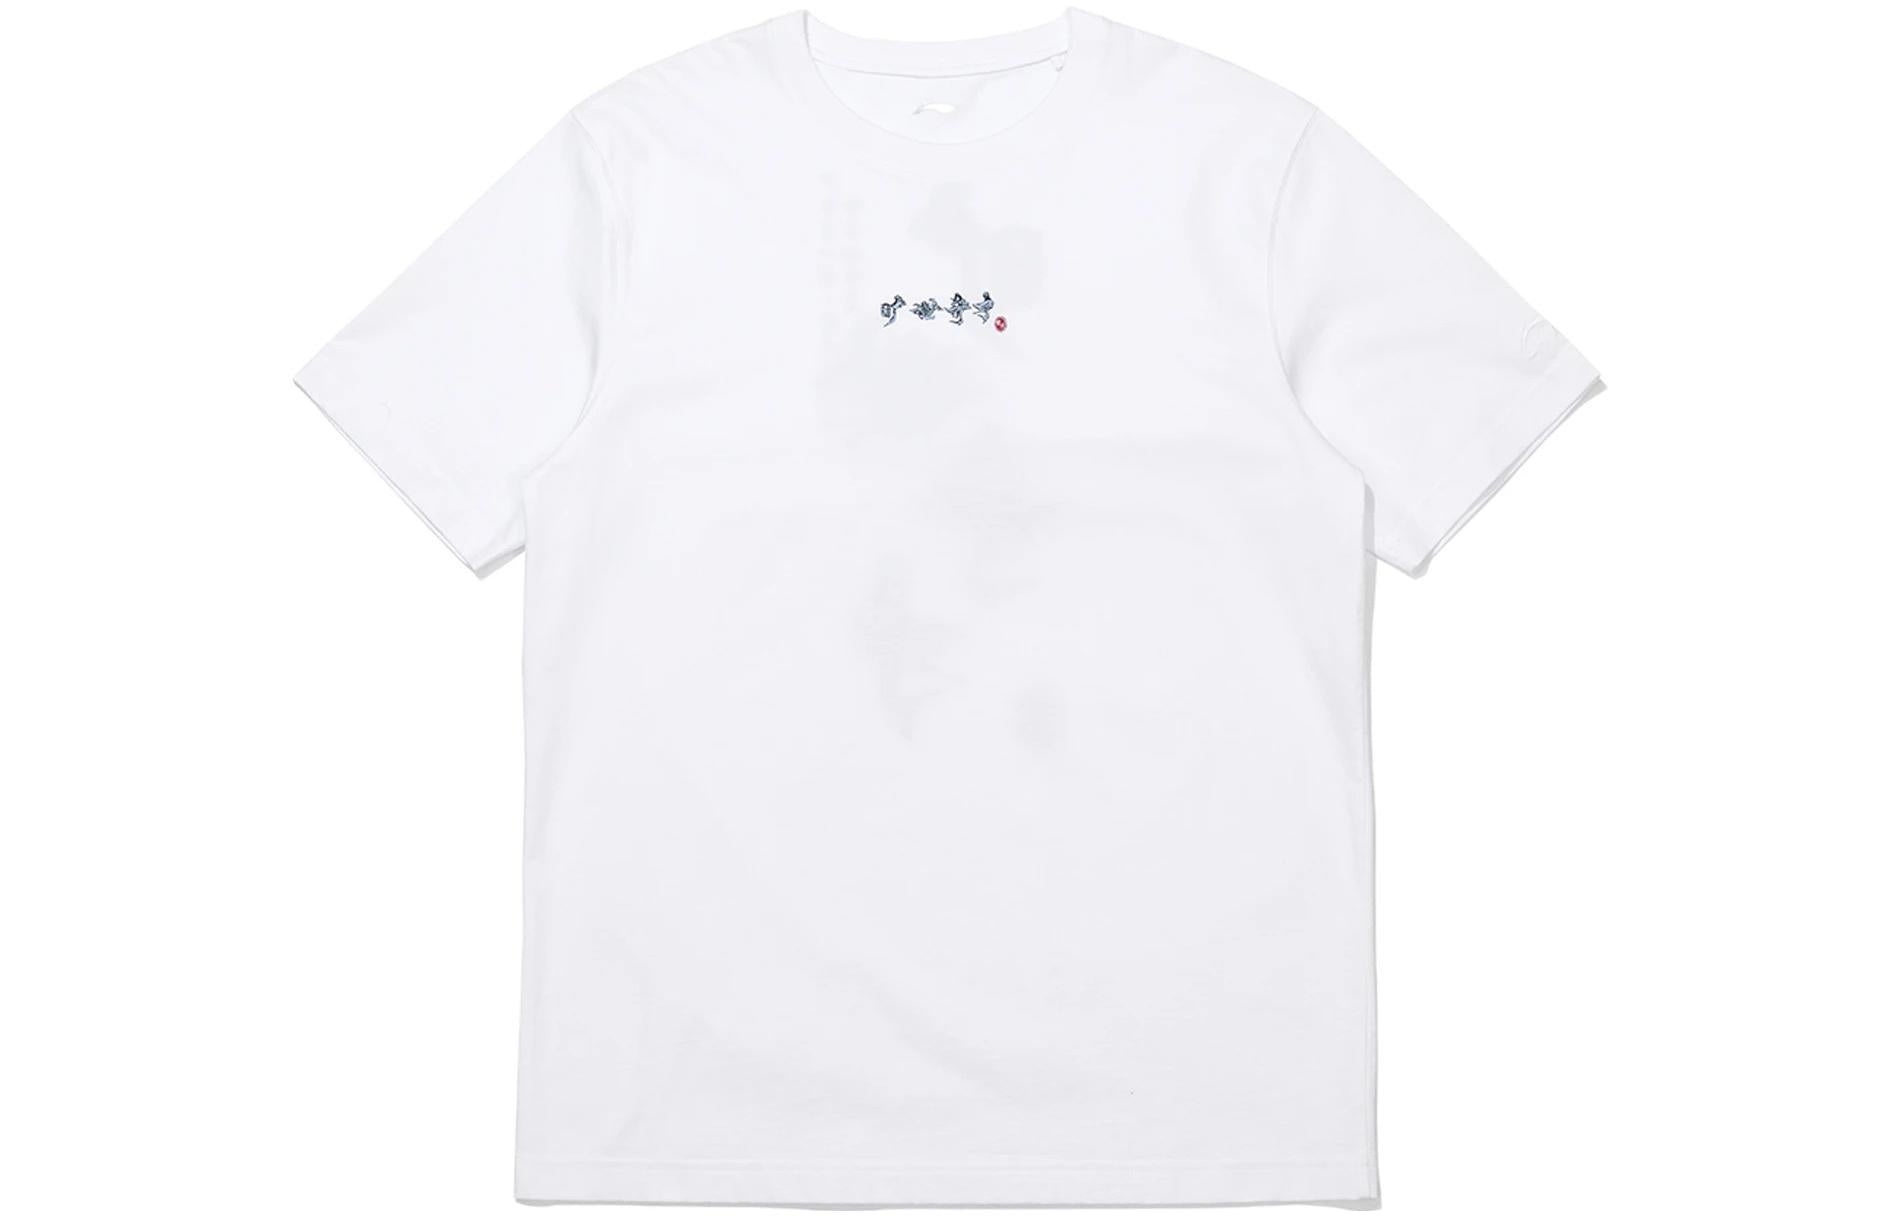 Li-Ning Graphic Printed T-Shirt 'White Blue' AHSS371-1 - 1